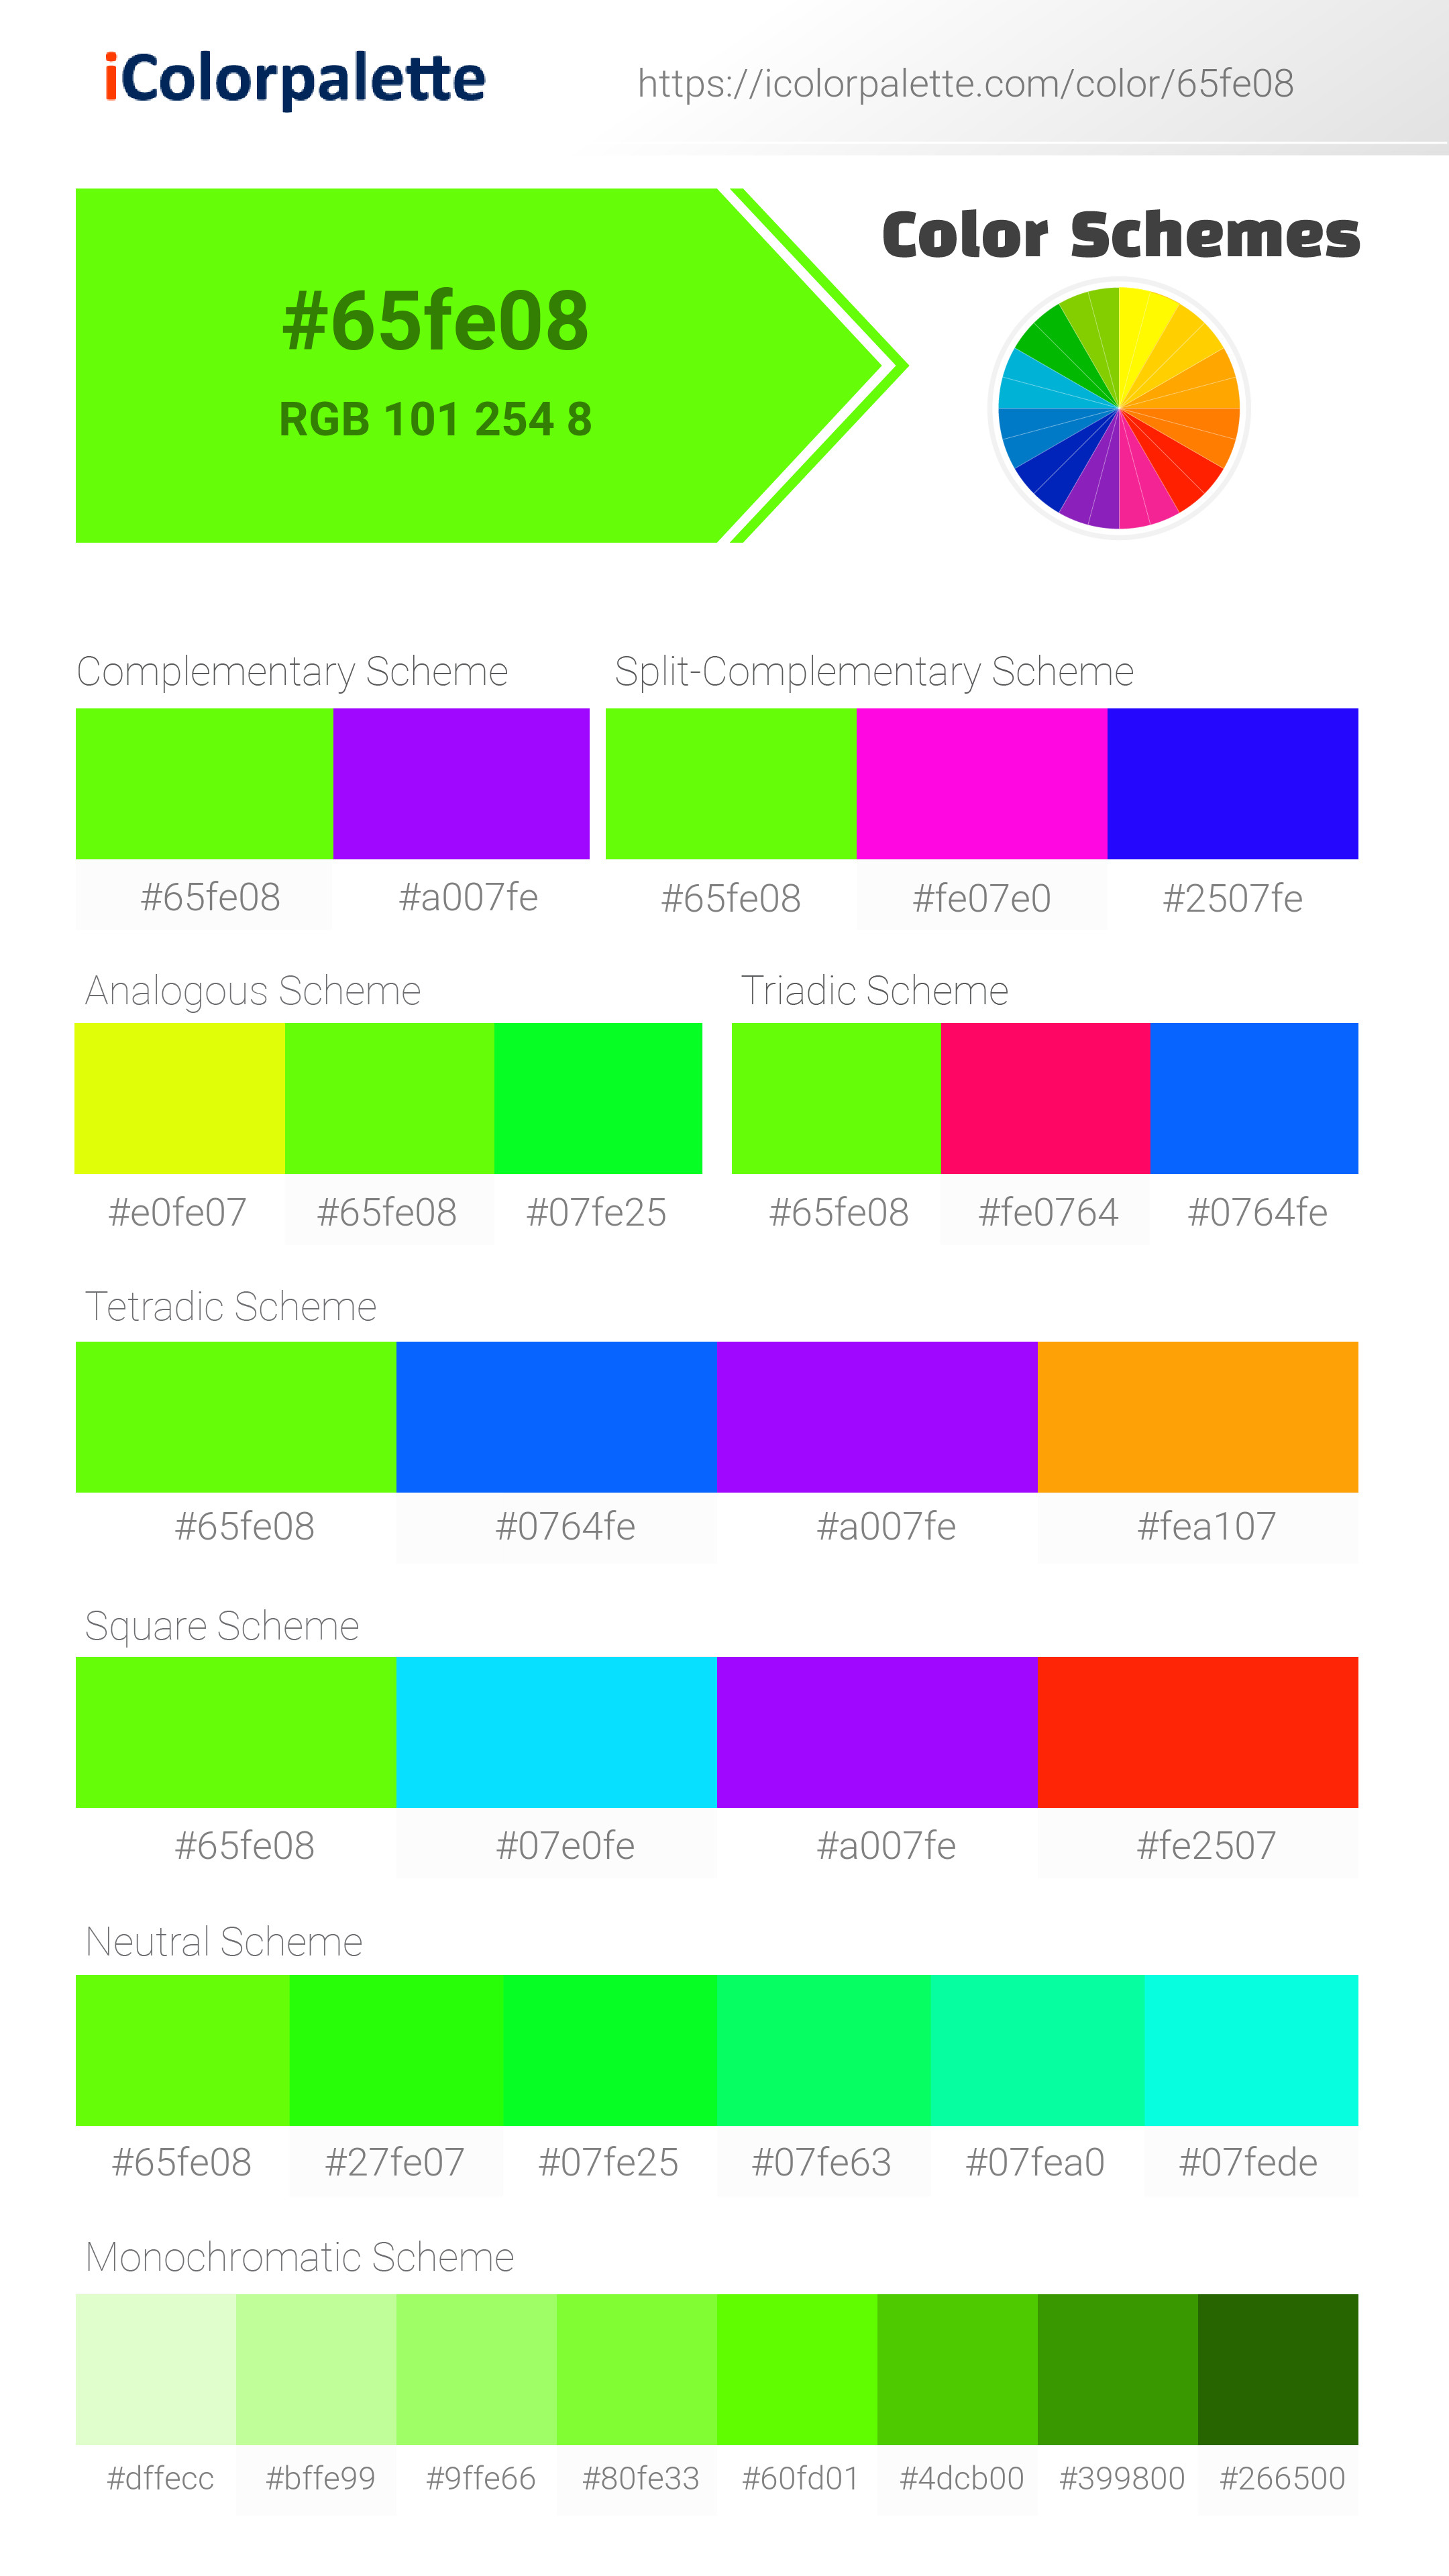 https://www.icolorpalette.com/download/schemes/65fe08_colorschemes_icolorpalette.jpg